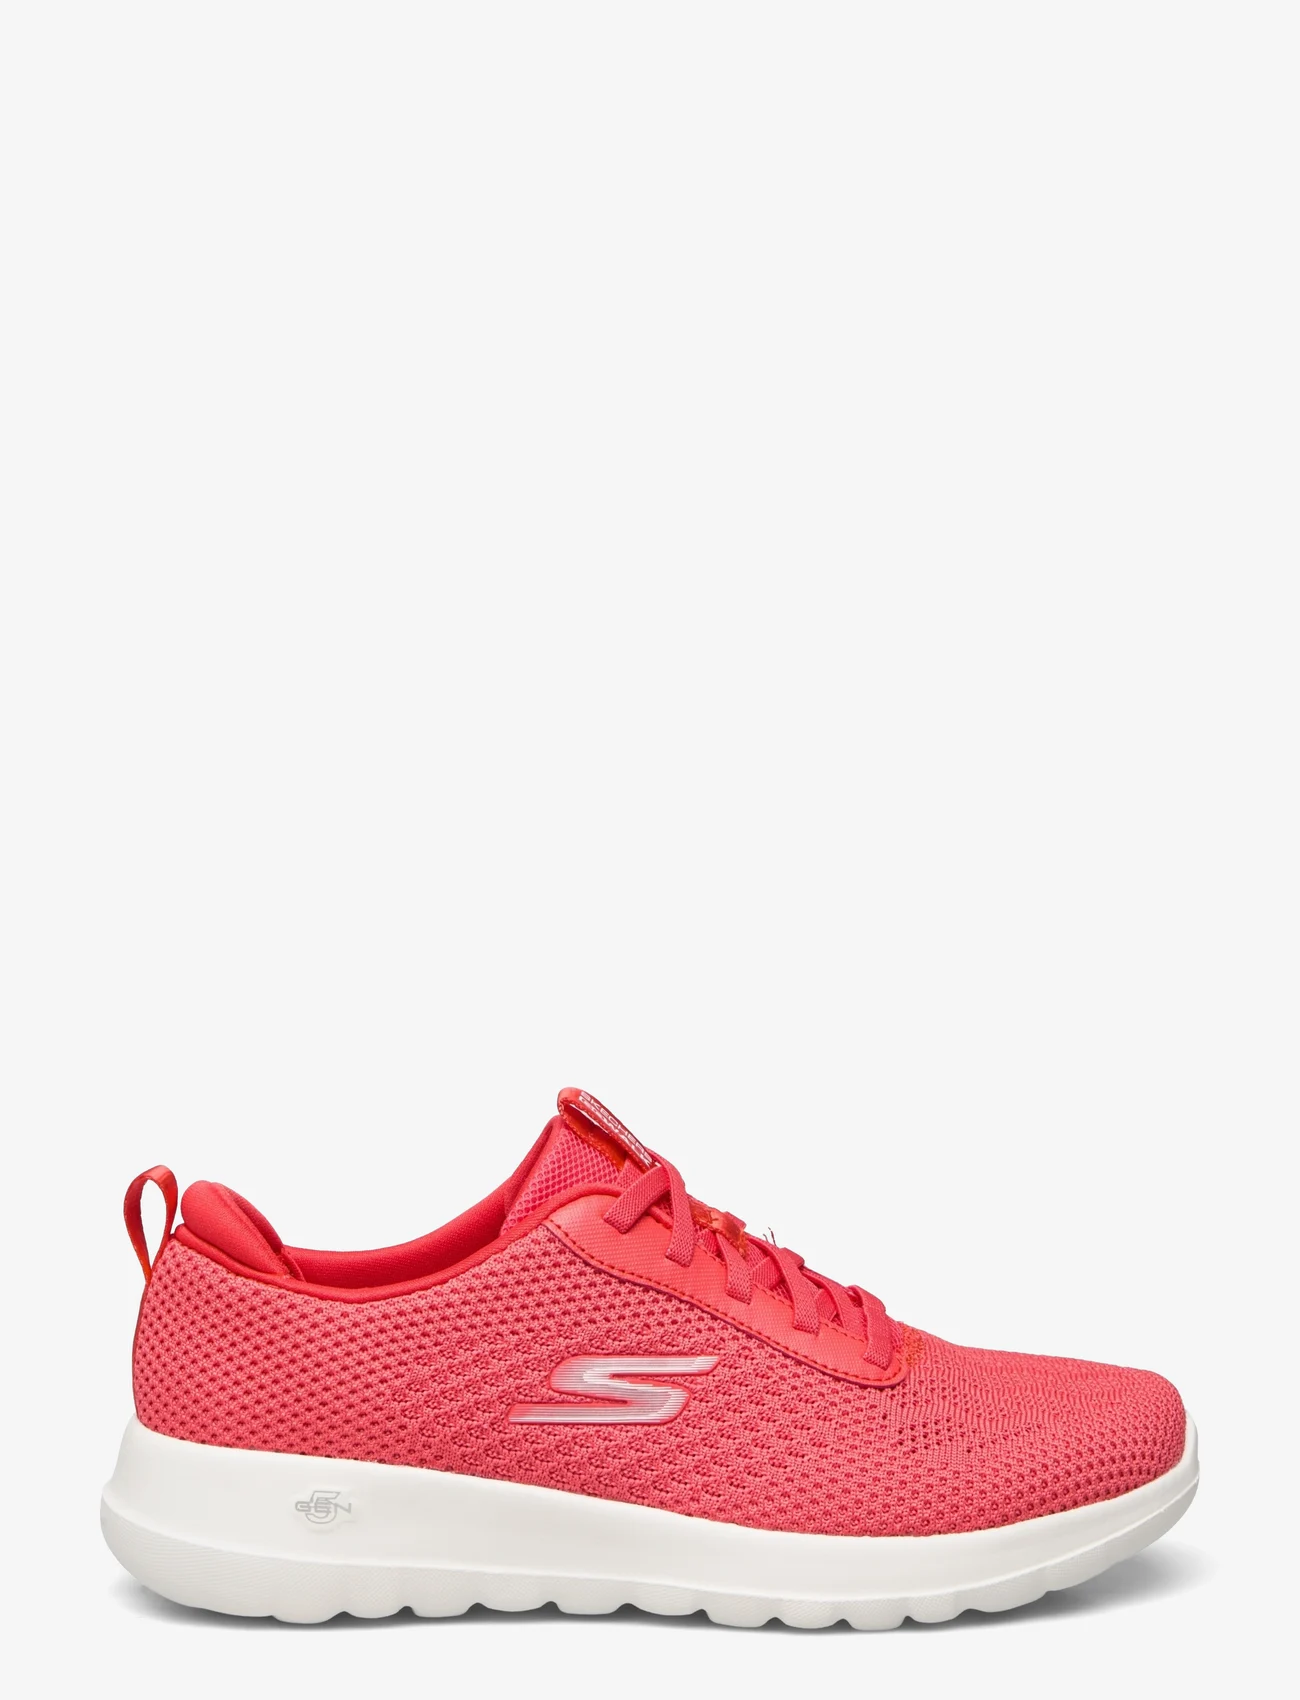 Skechers - Womens Go Walk Joy - Wonderful Spring - sneakers med lavt skaft - red red - 1